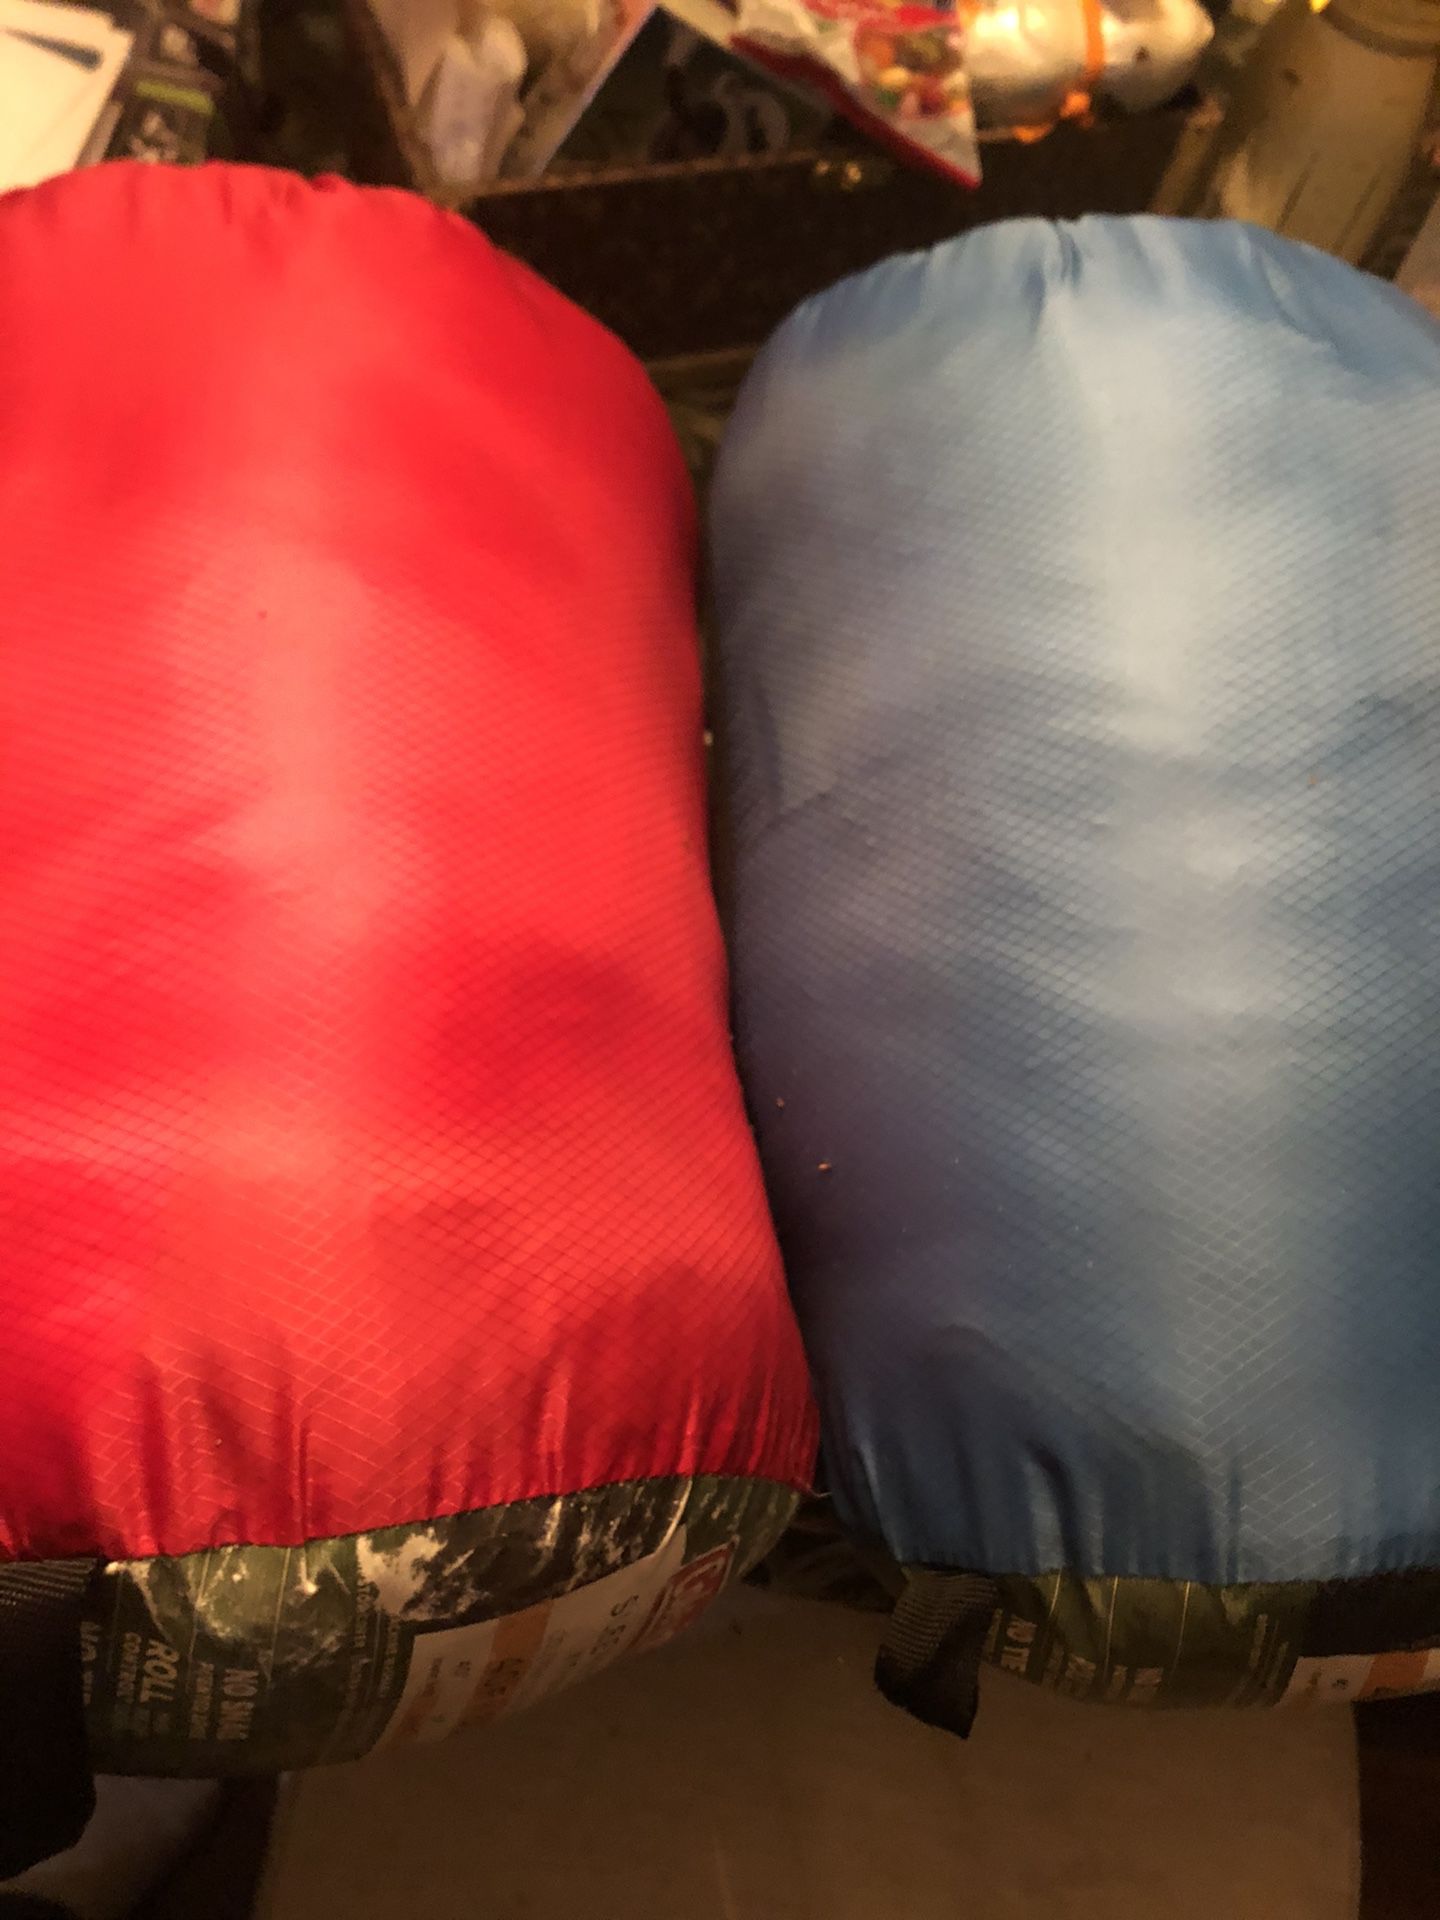 Two Coleman sleeping bags